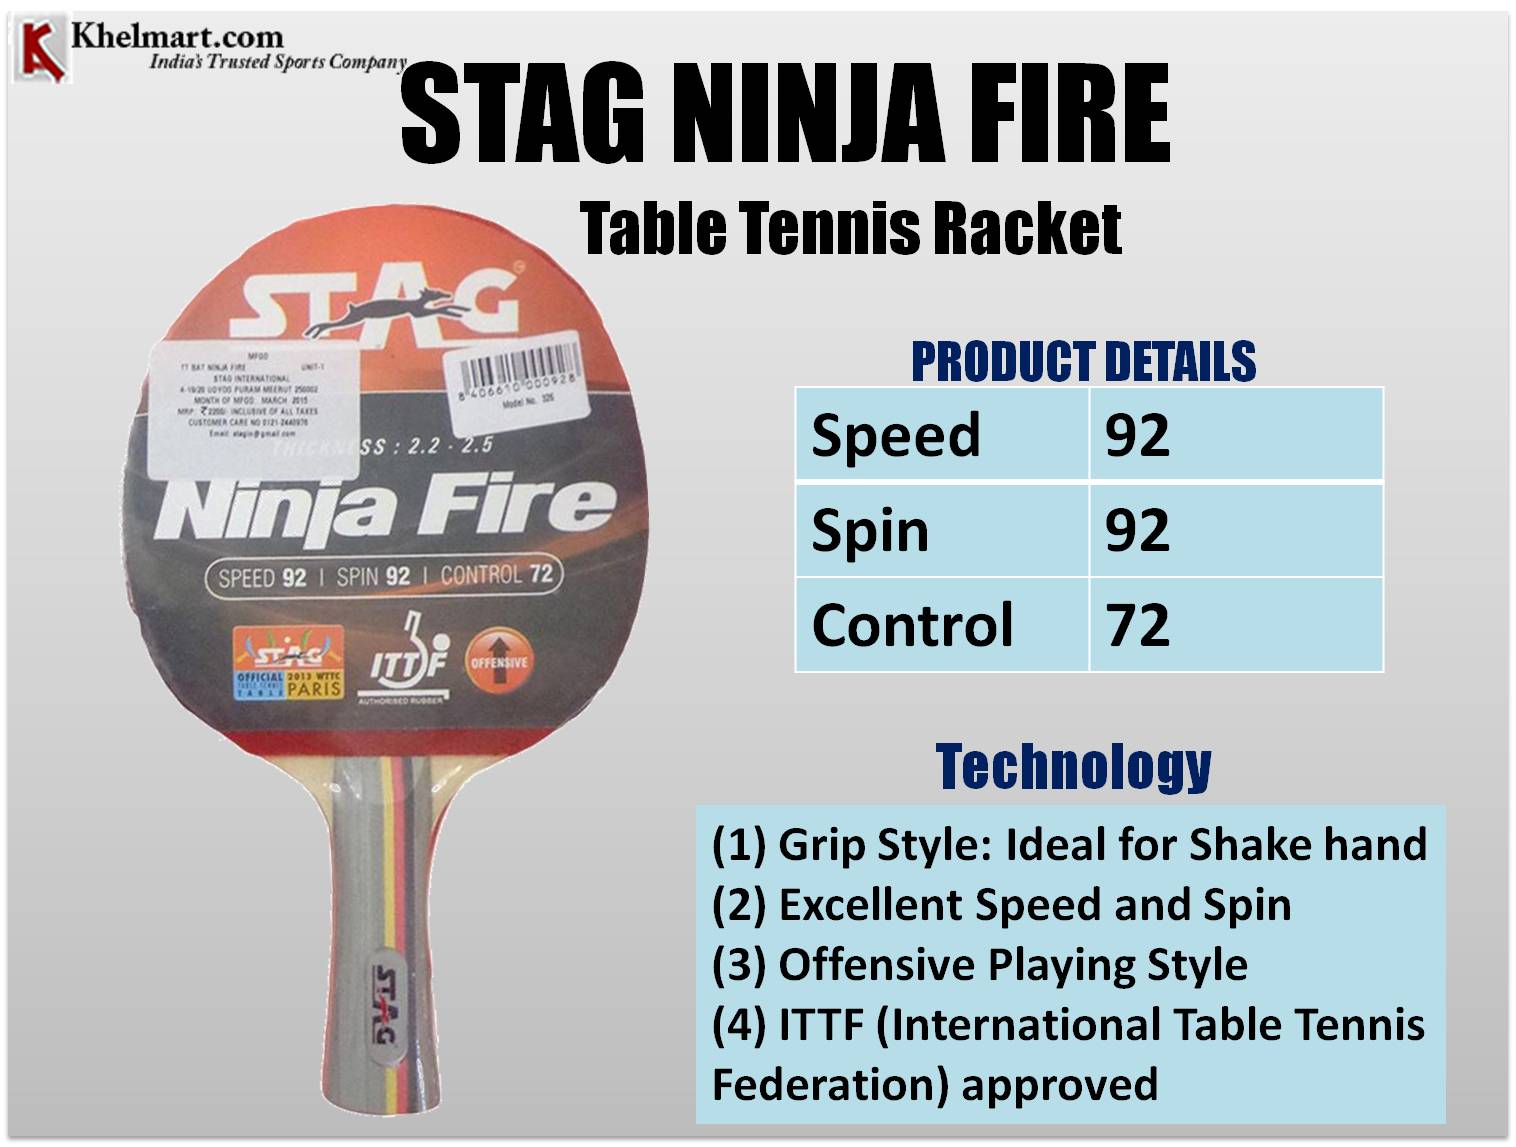 STAG_NINJA_FIRE_Table_Tennis_Racket.jpg